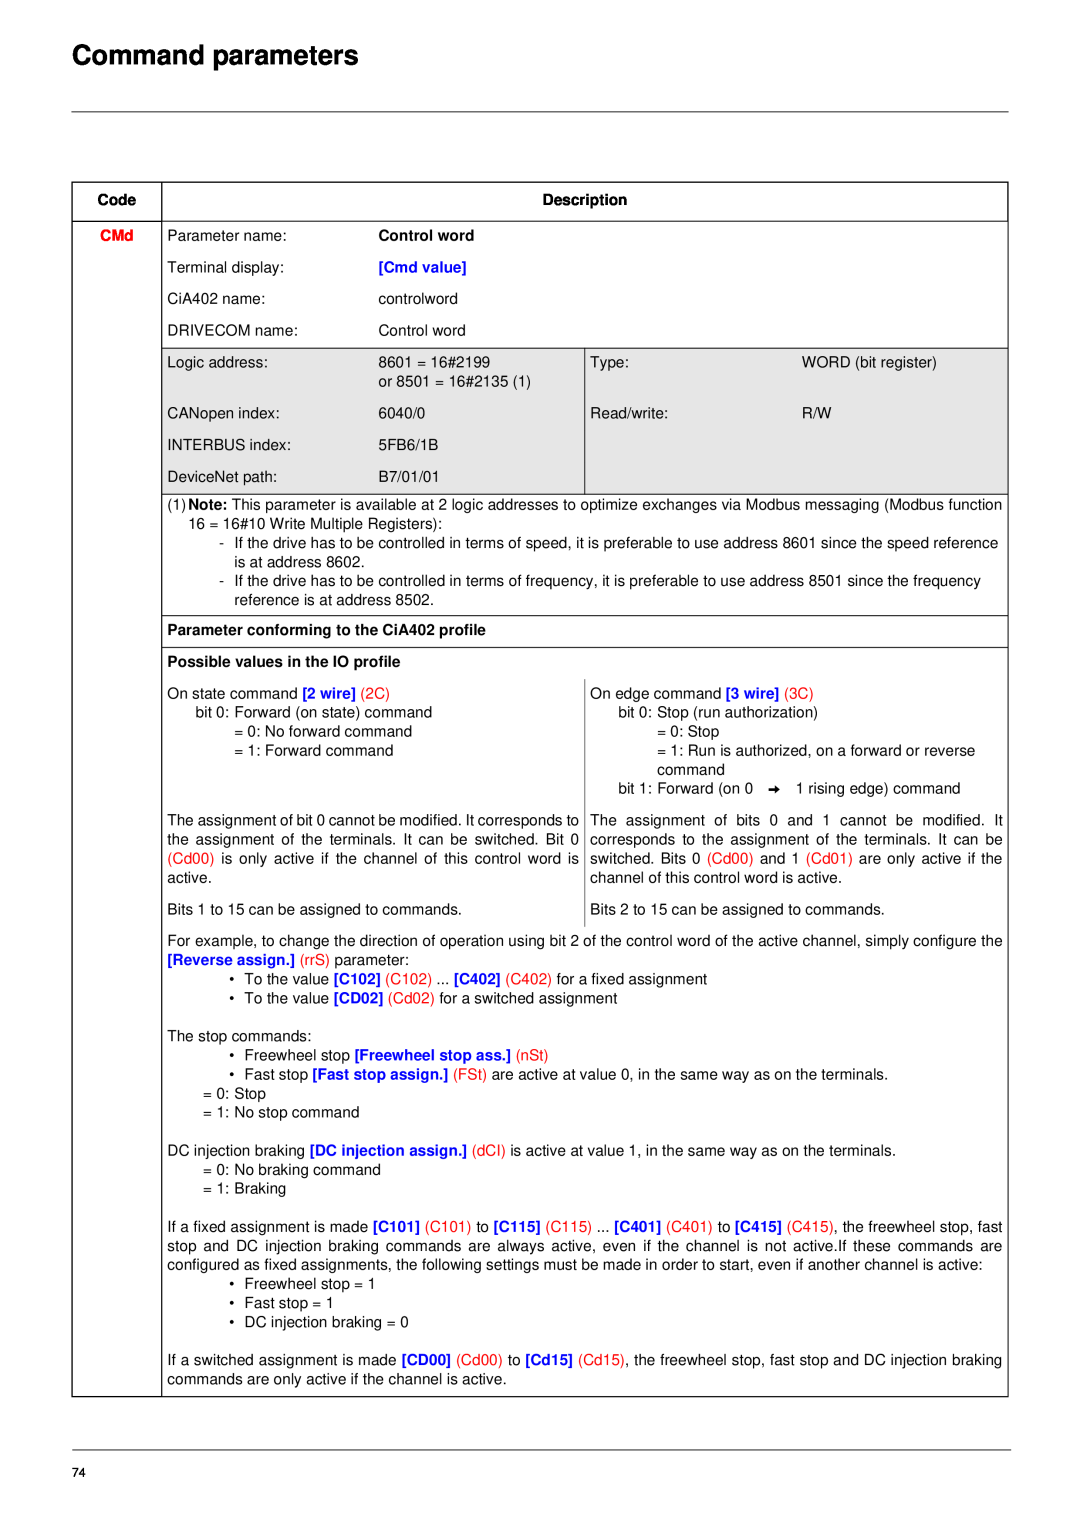 Schneider Electric 61 user manual Command parameters, Description, Control word, Parameter conforming to the CiA402 profile 